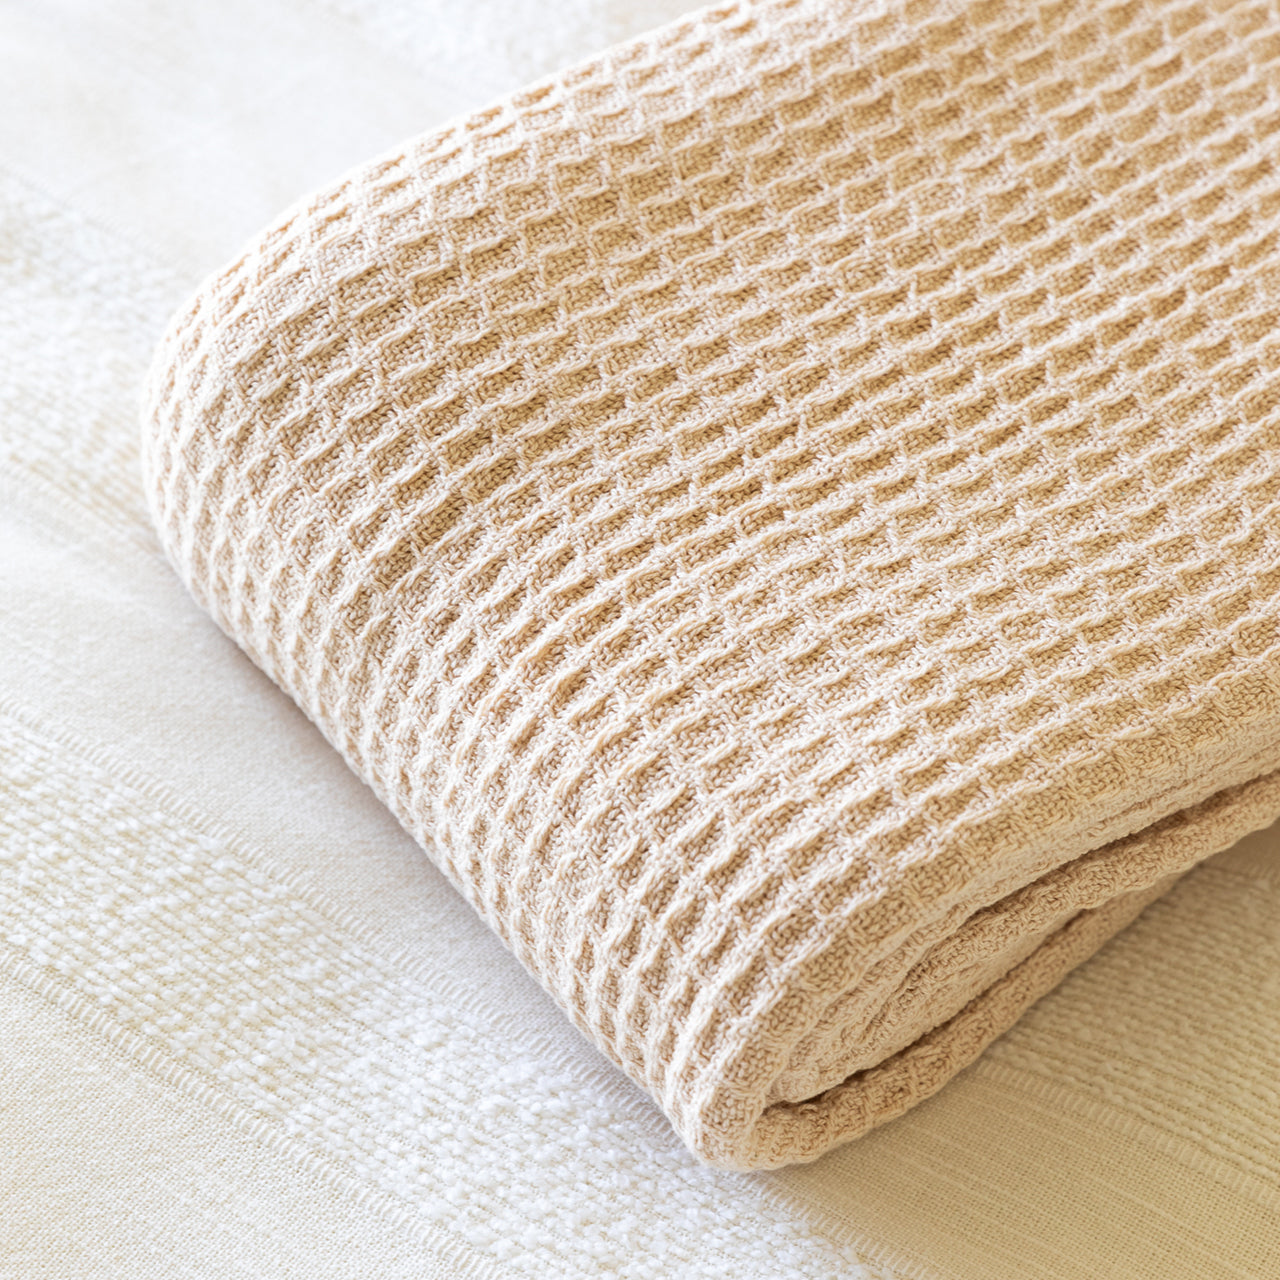 Cotton Blanket Natural folded up on bed